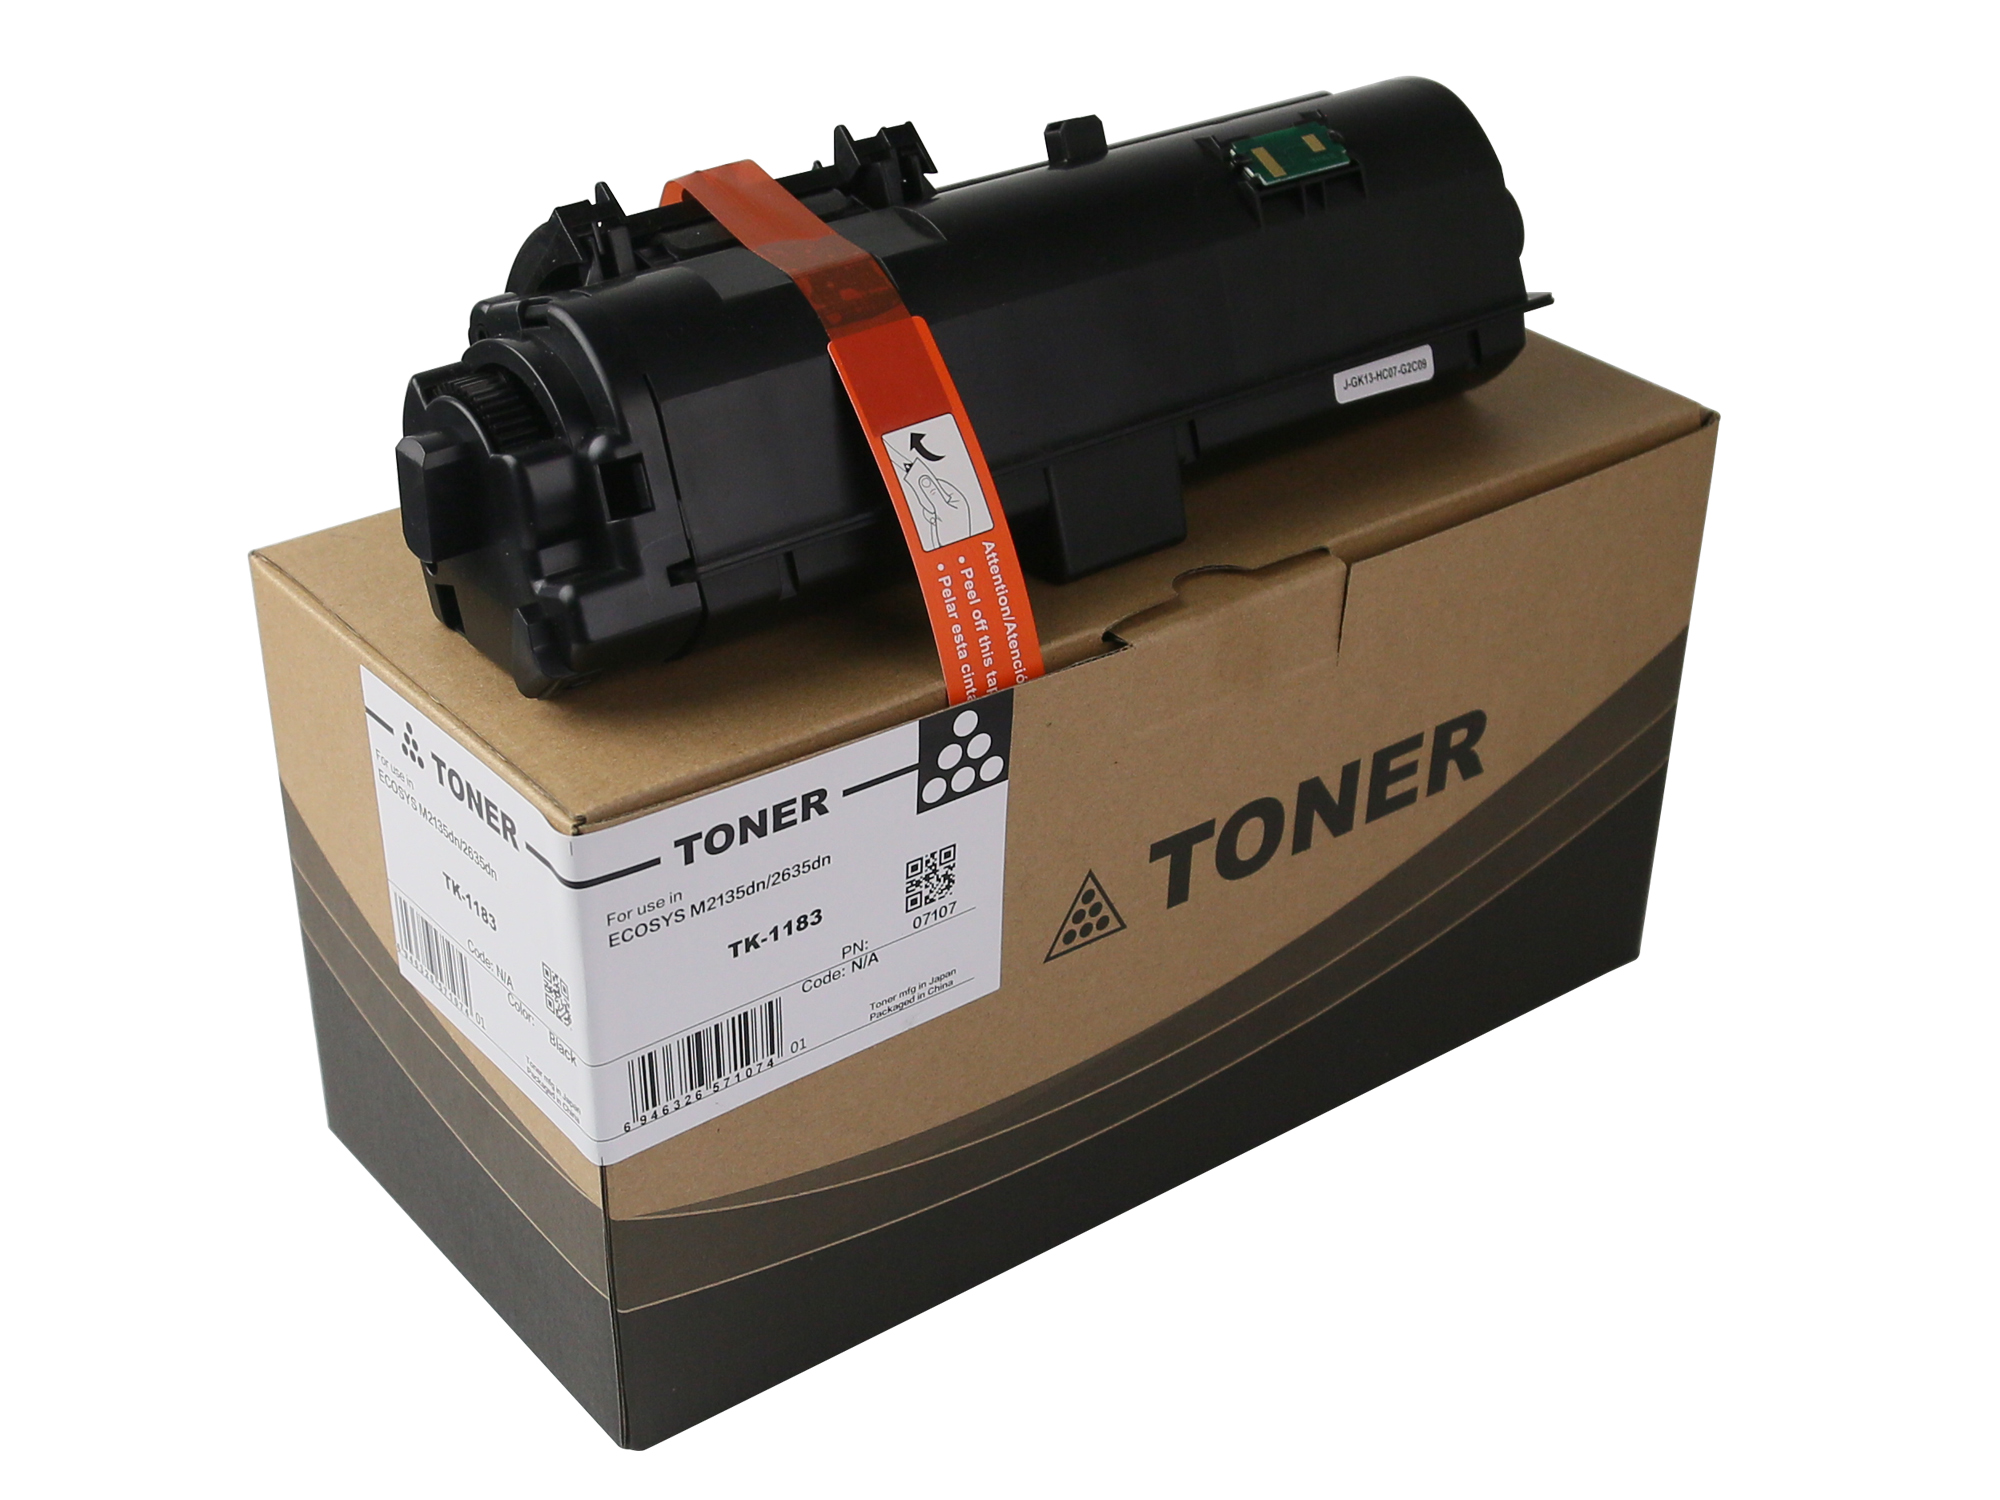 TK-1183 Toner Cartridge for Kyocera ECOSYS M2135dn